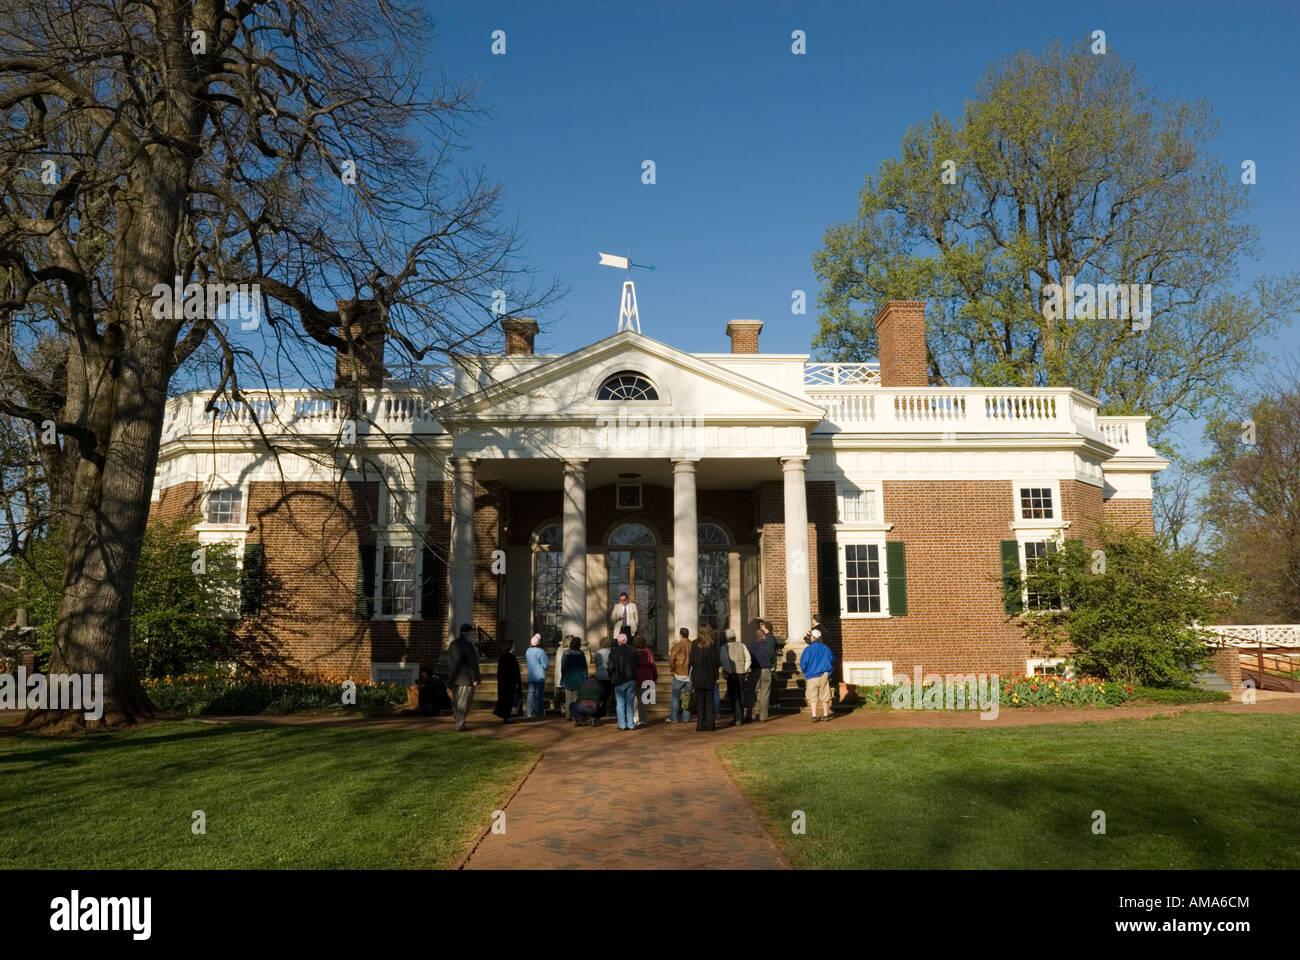 Thomas Jefferson's home, Monticello, in Virginia. Stock Photo